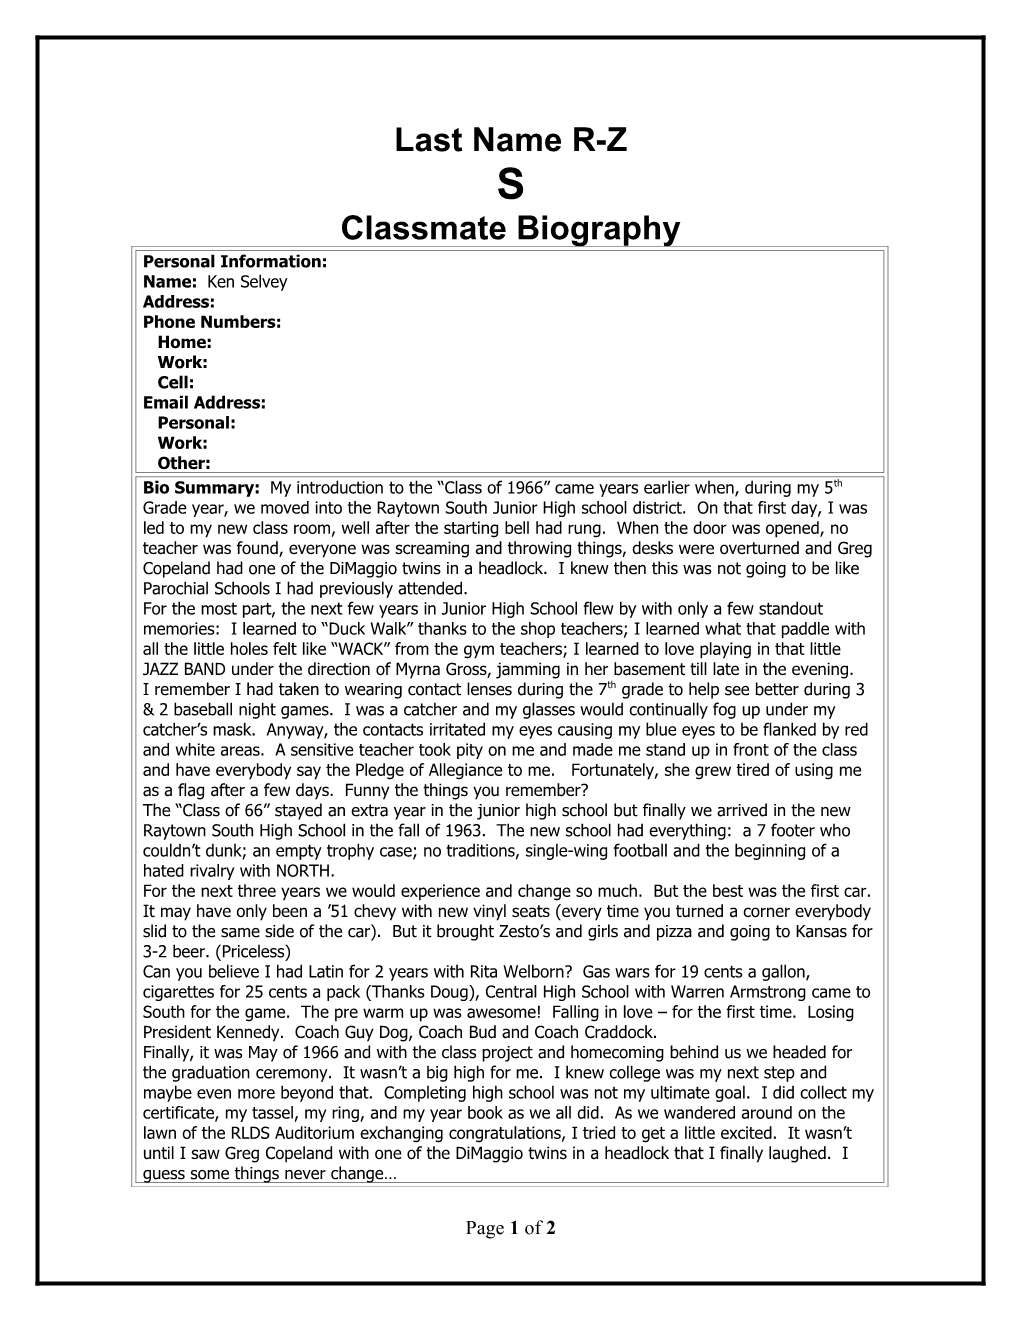 Classmate Biography